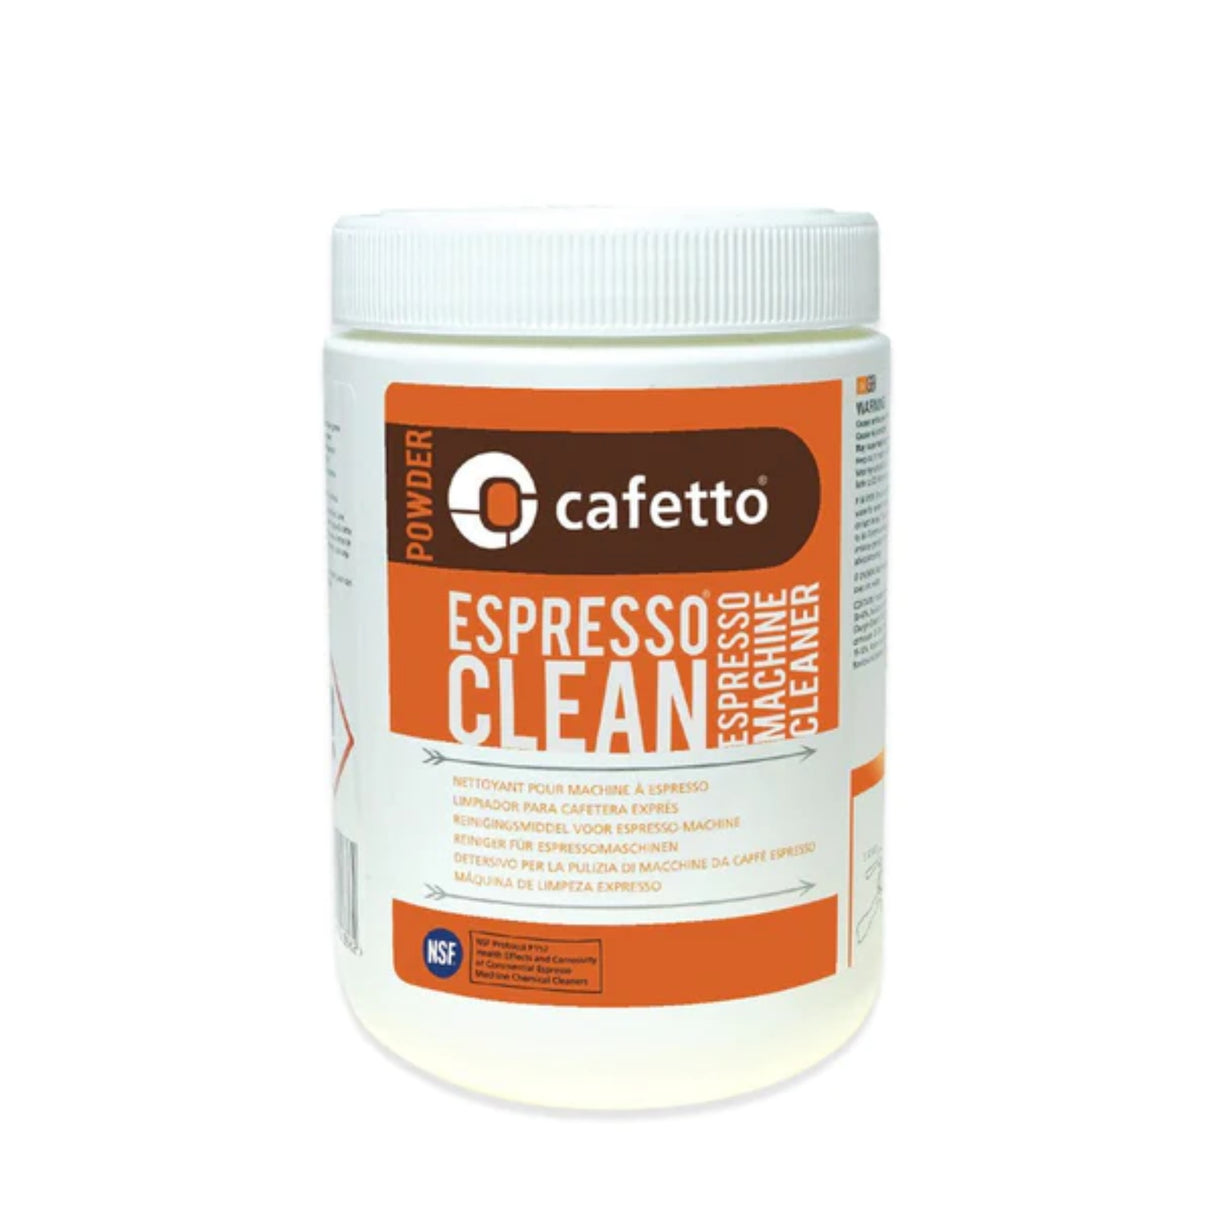 mycuppa Cafetto 500g espresso machine cleaning powder